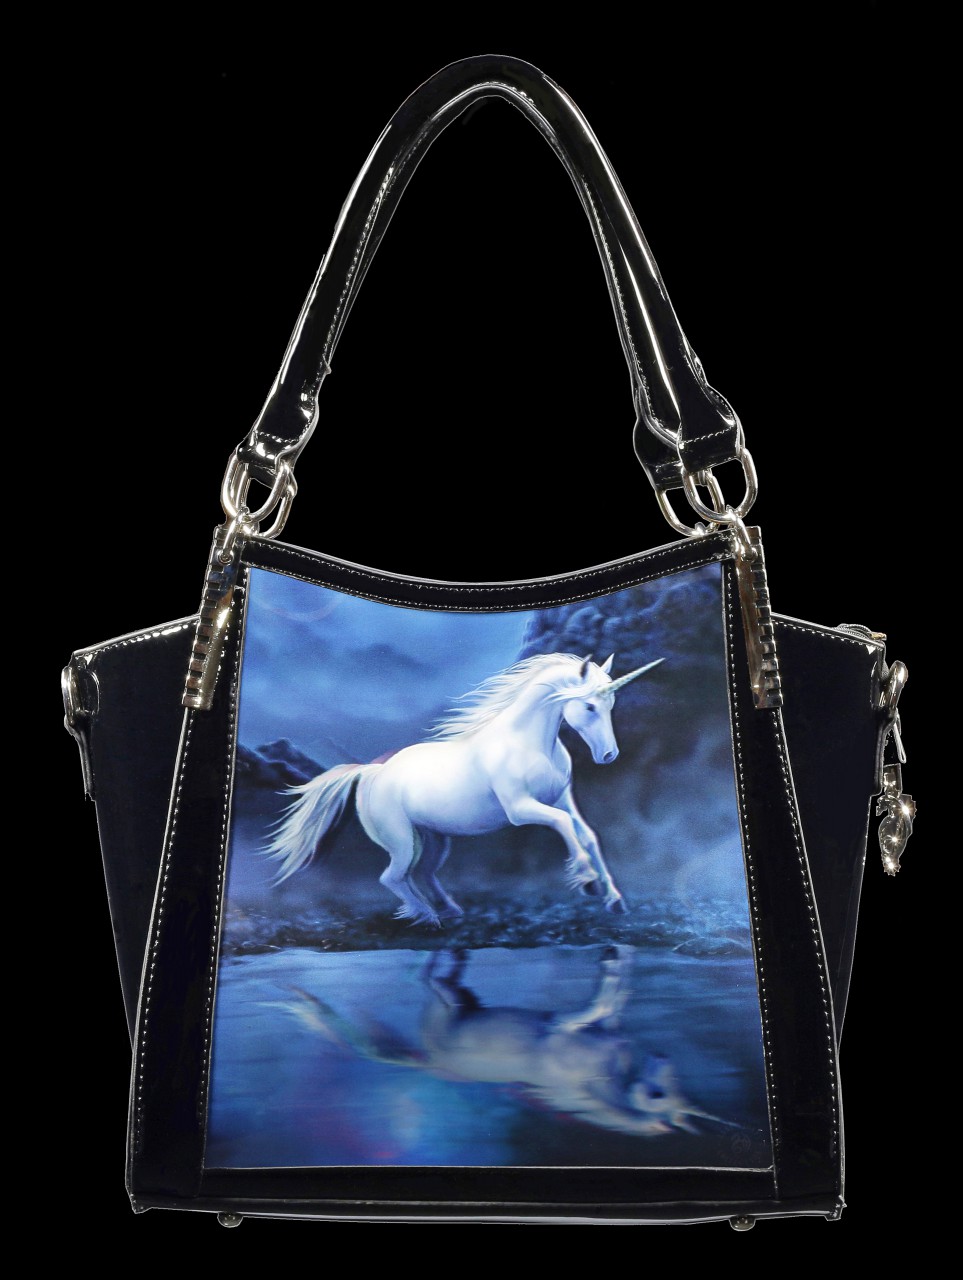 Lack Handtasche mit 3D Motiv - Moonlight Unicorn